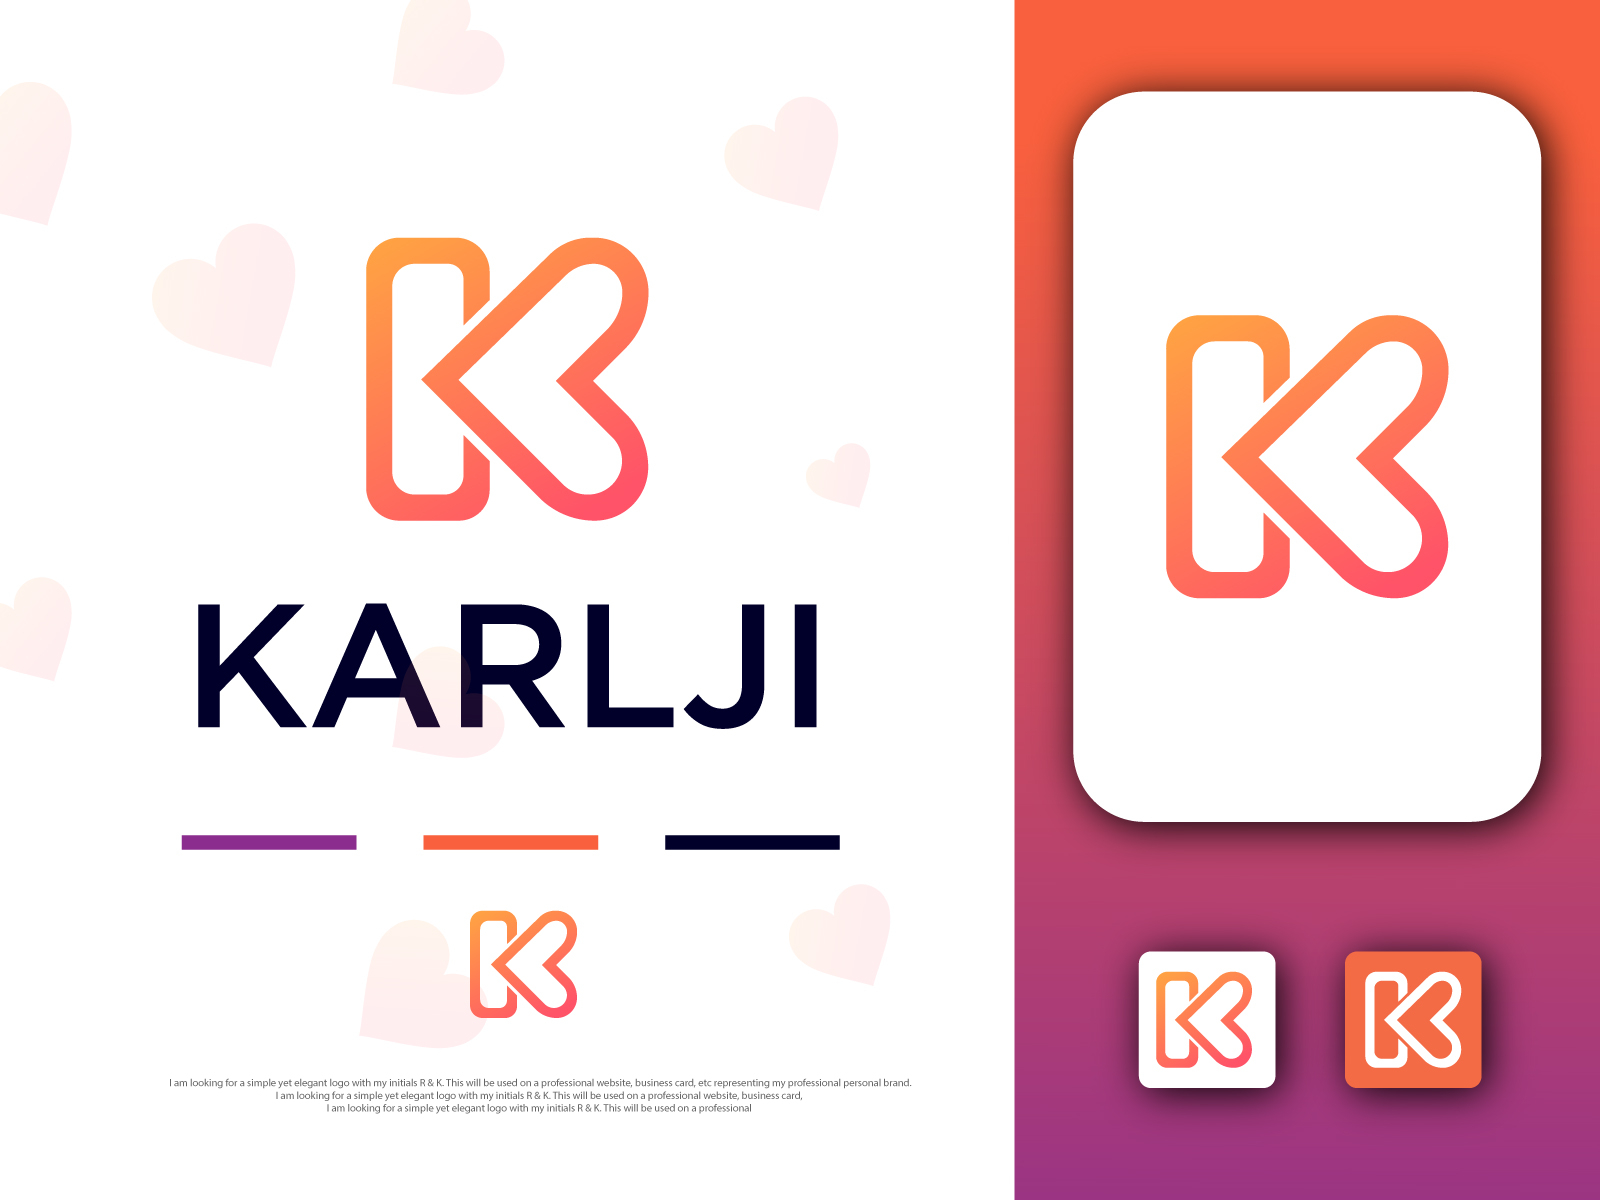 Kk love logo Vectors & Illustrations for Free Download | Freepik